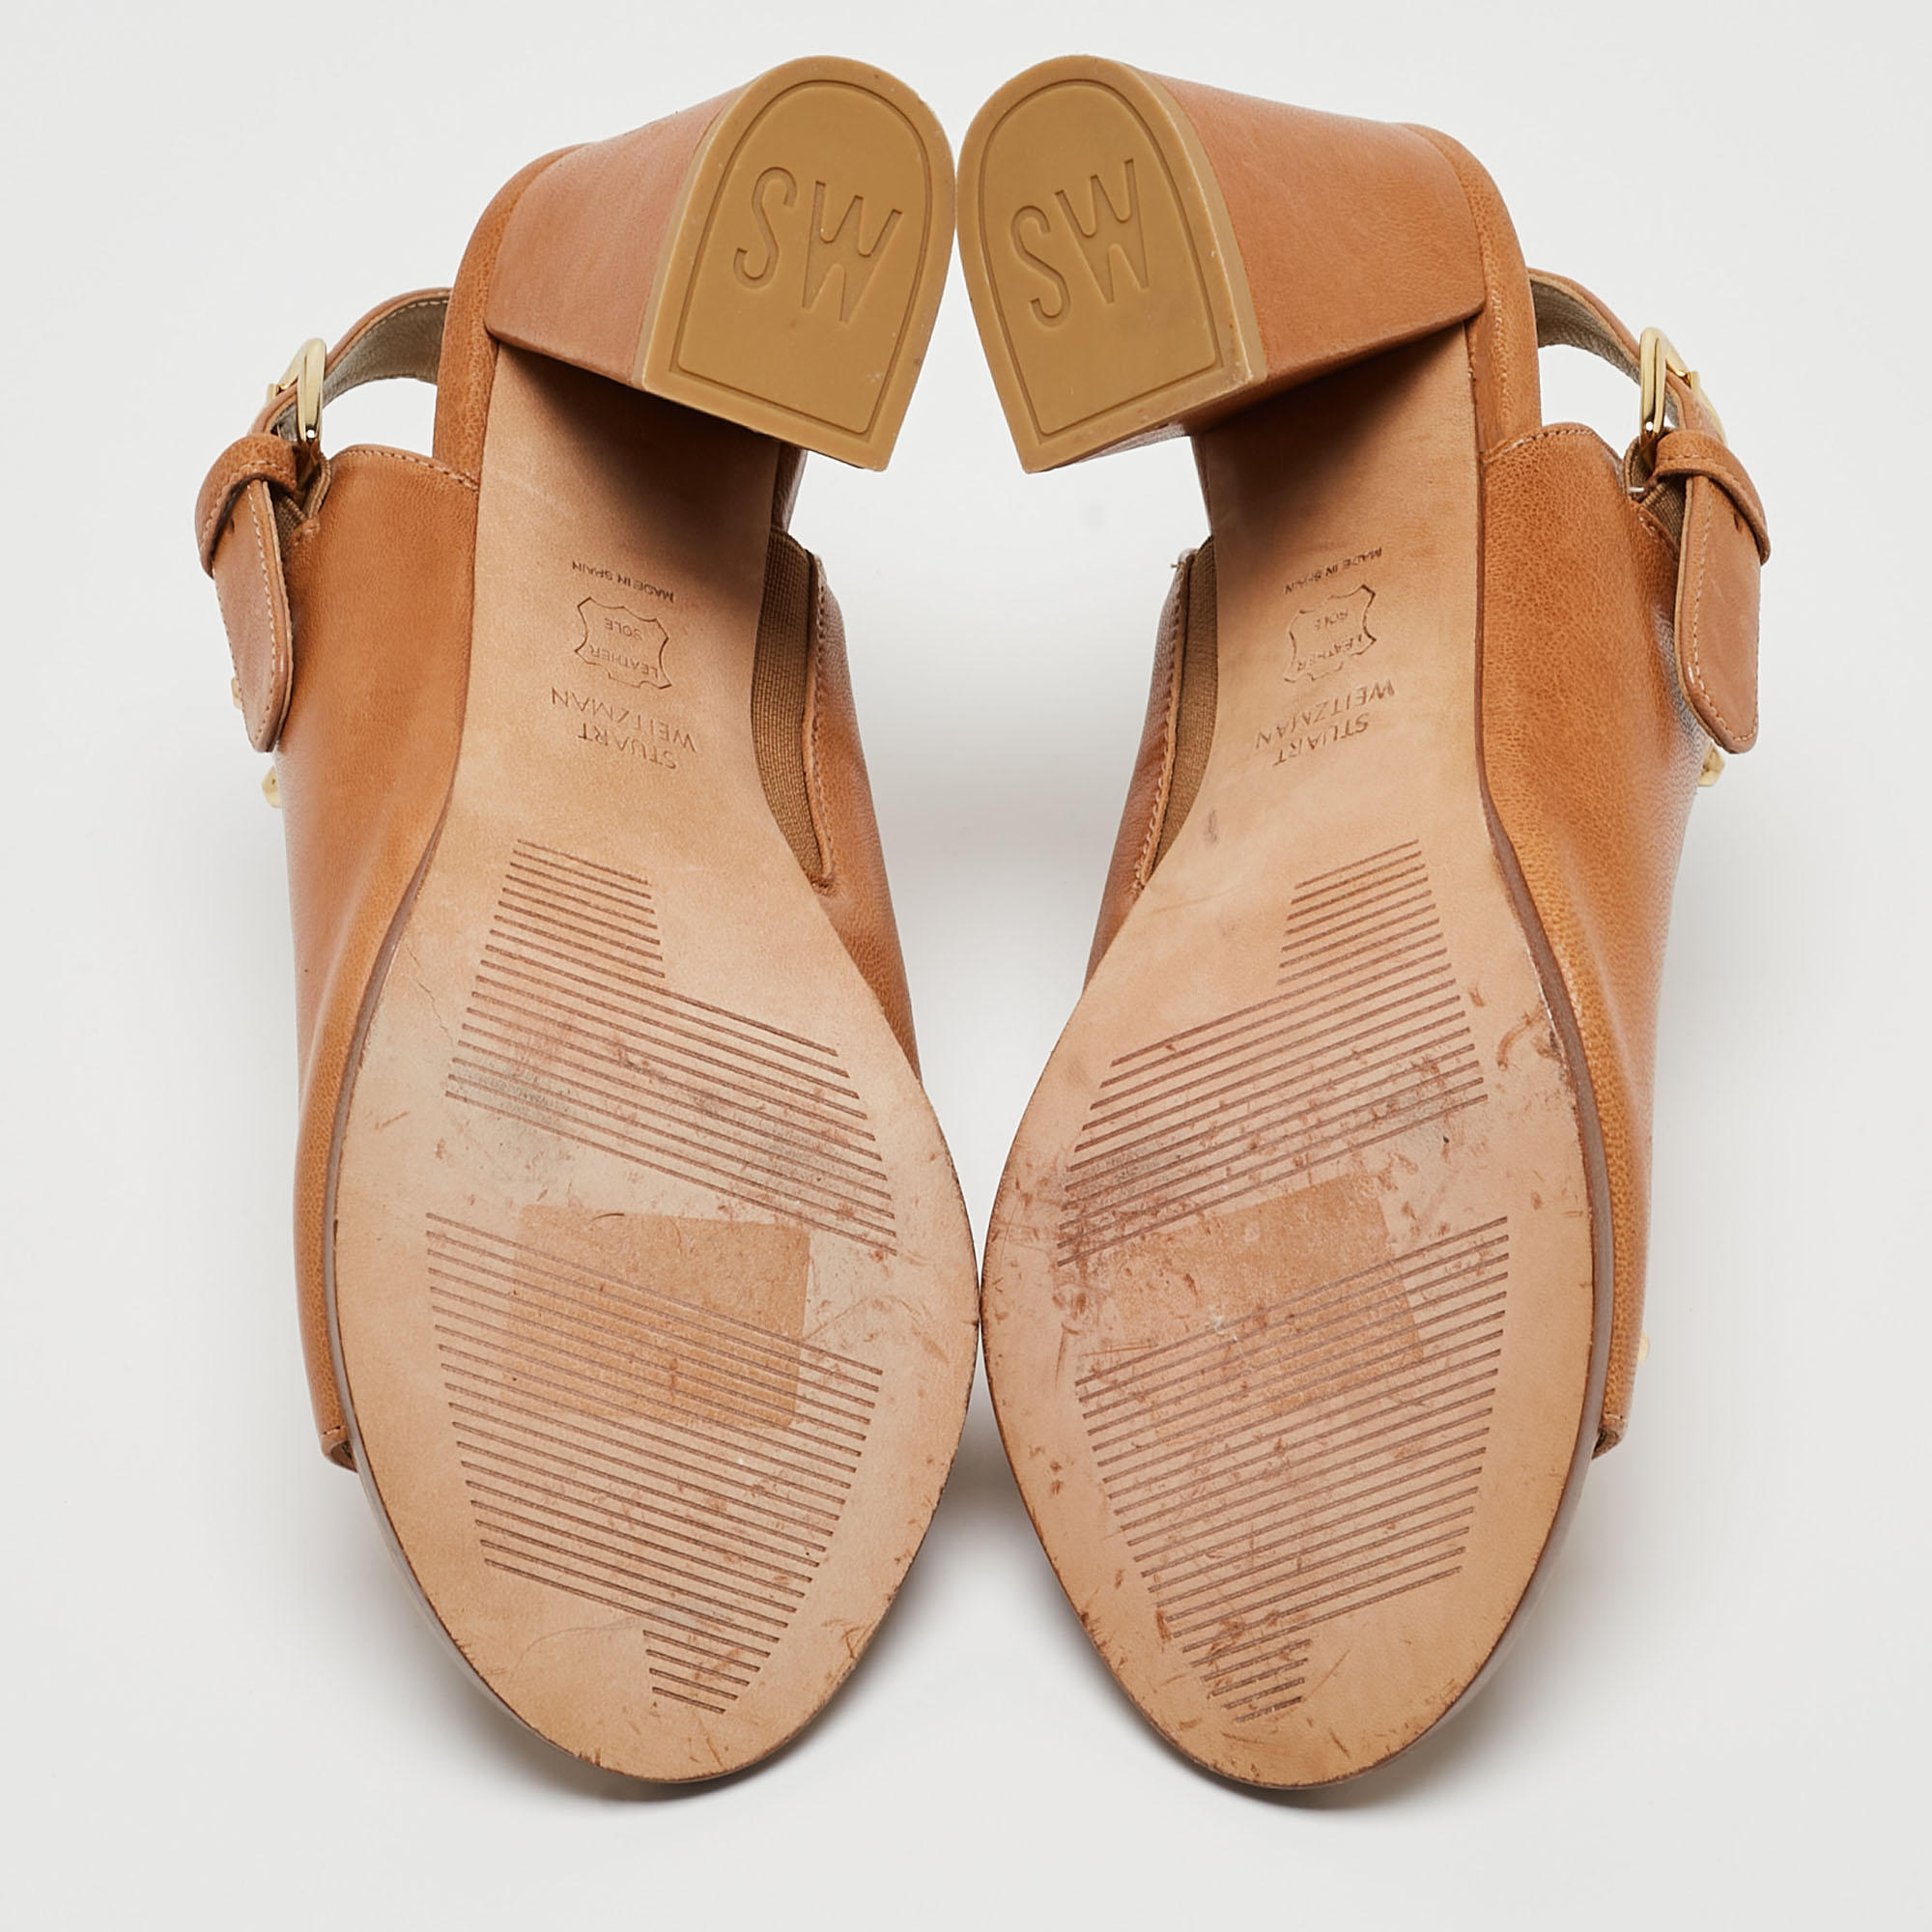 Stuart Weitzman Tan Leather Studded Slingback Sandals Size 36